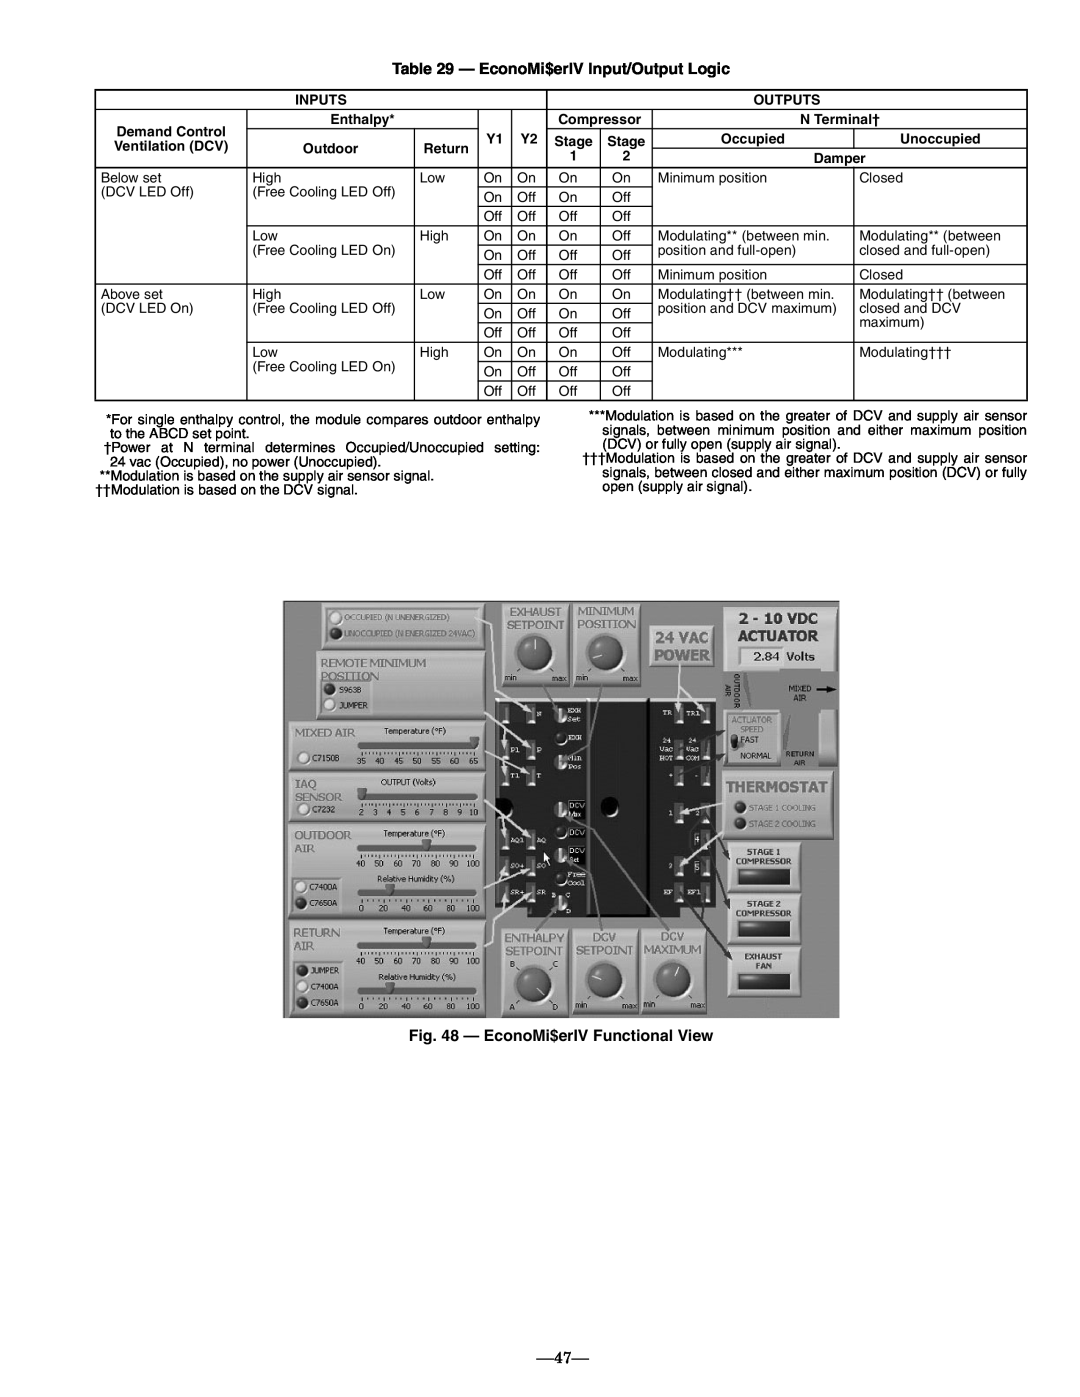 Bryant 580F operation manual EconoMi$erIV Input/Output Logic, EconoMi$erIV Functional View 